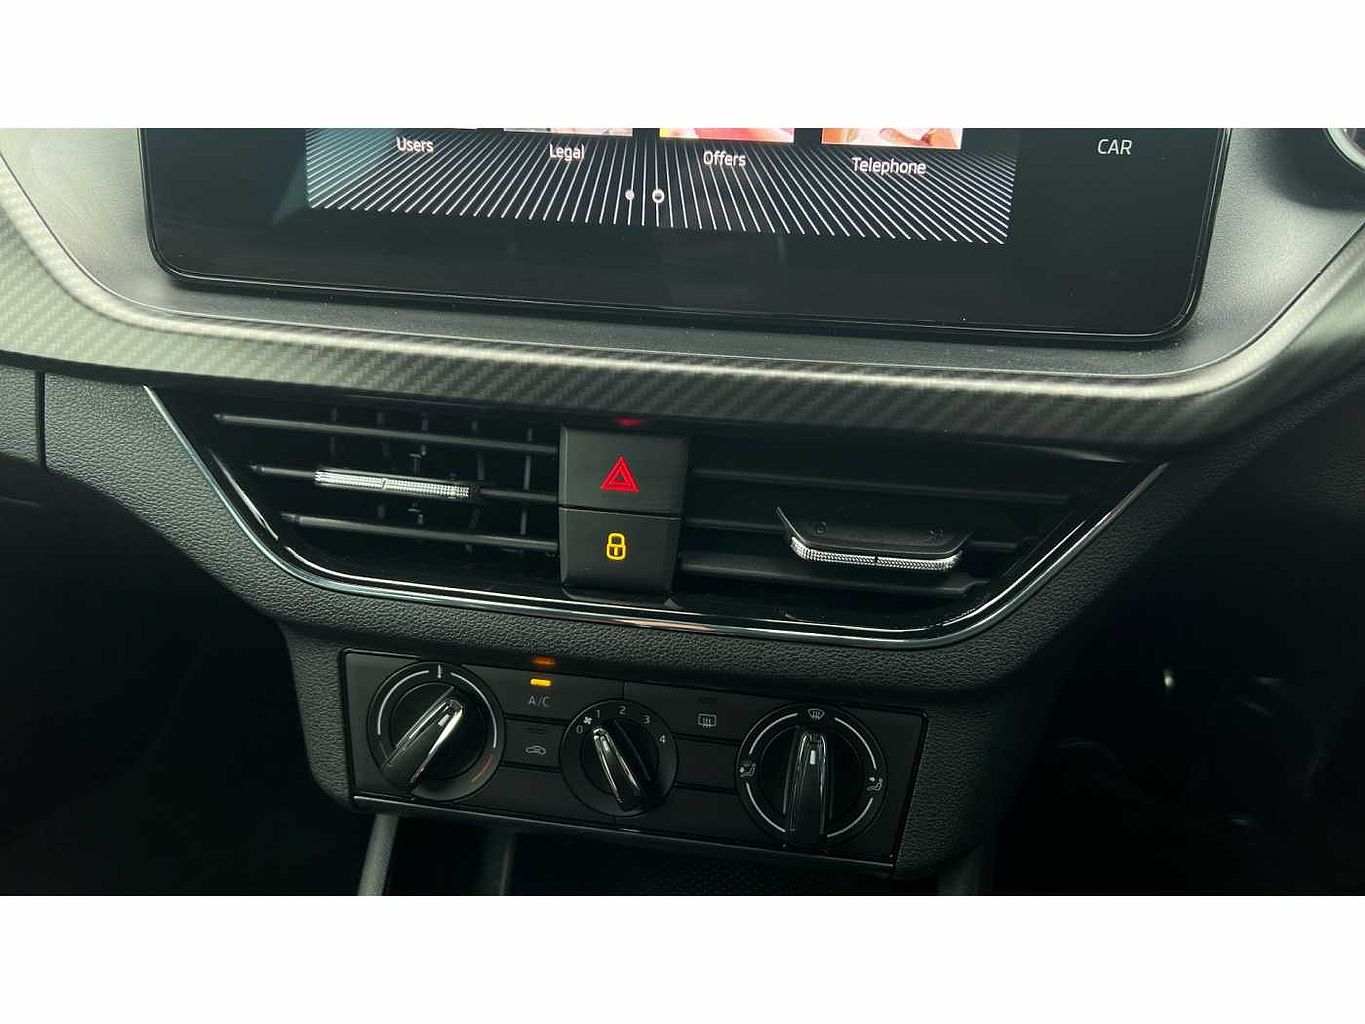 SKODA Kamiq 1.0 TSI (110ps) Monte Carlo DSG SUV